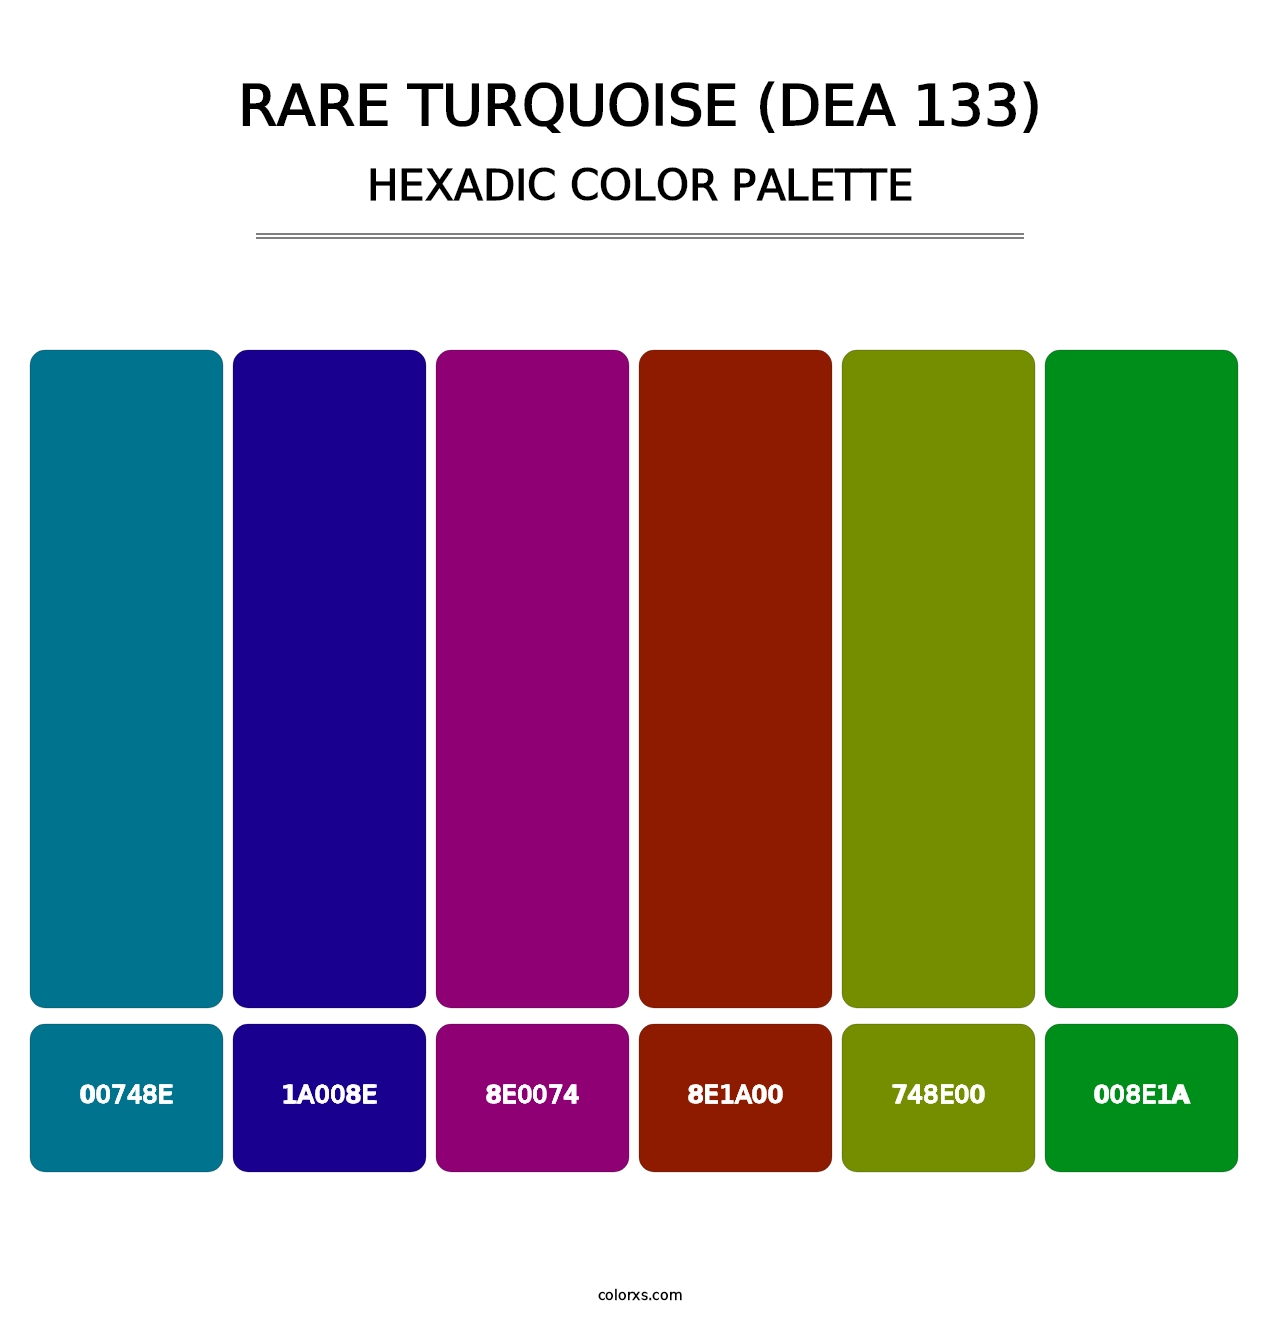 Rare Turquoise (DEA 133) - Hexadic Color Palette